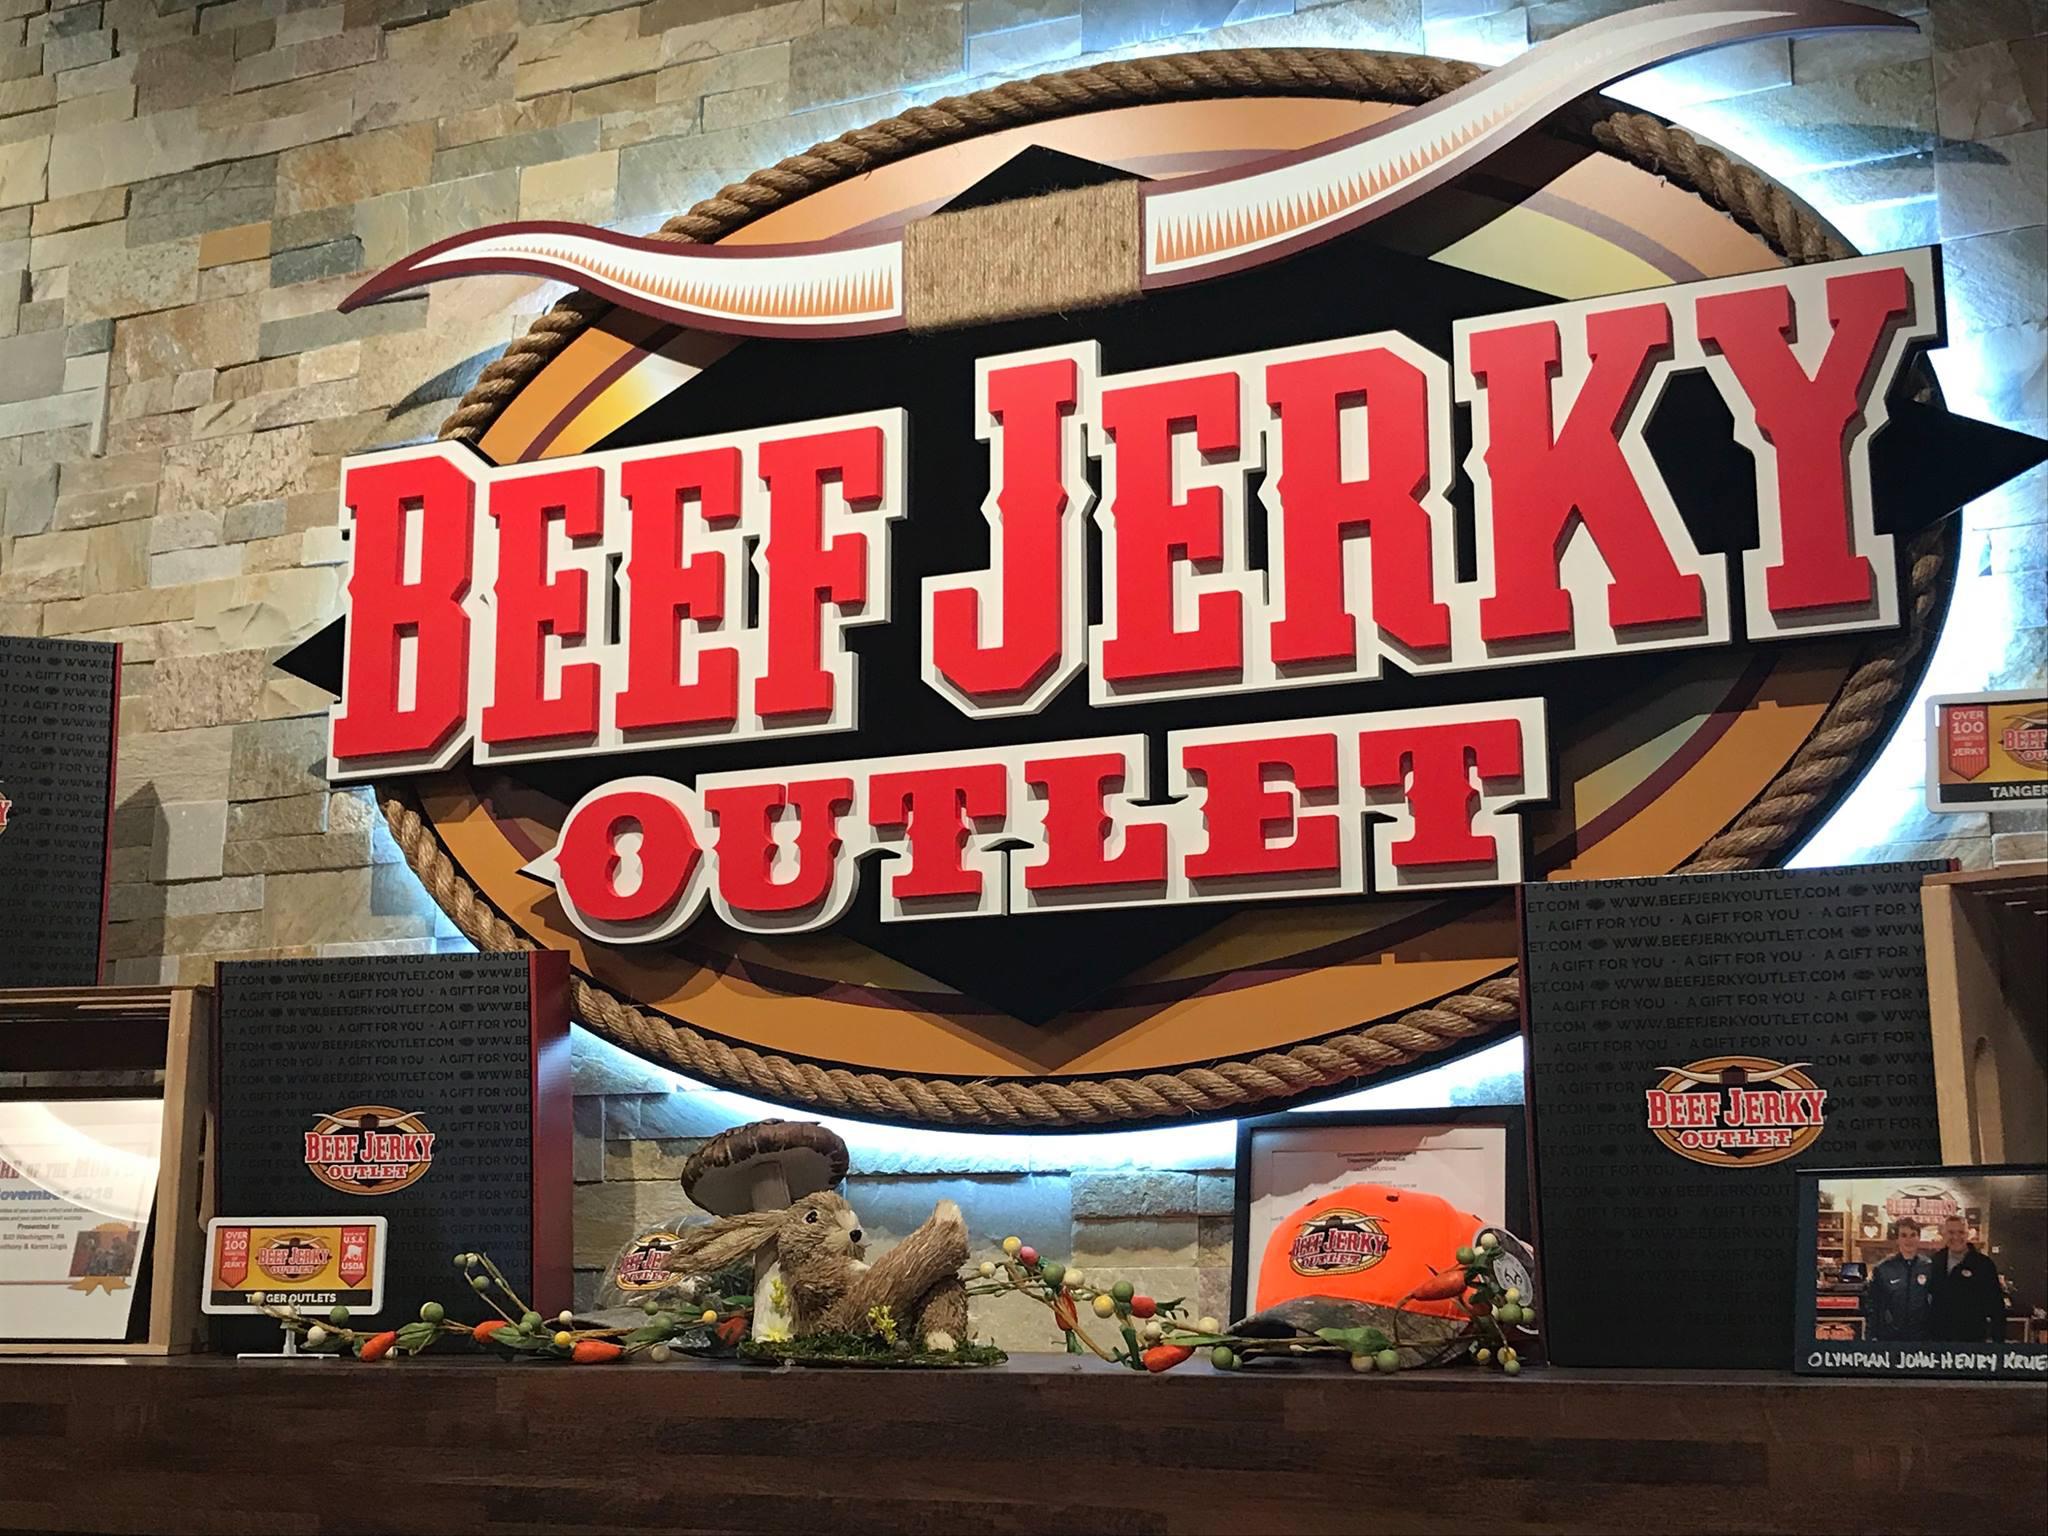 Beef Jerky Outlet - Washington, PA Photo